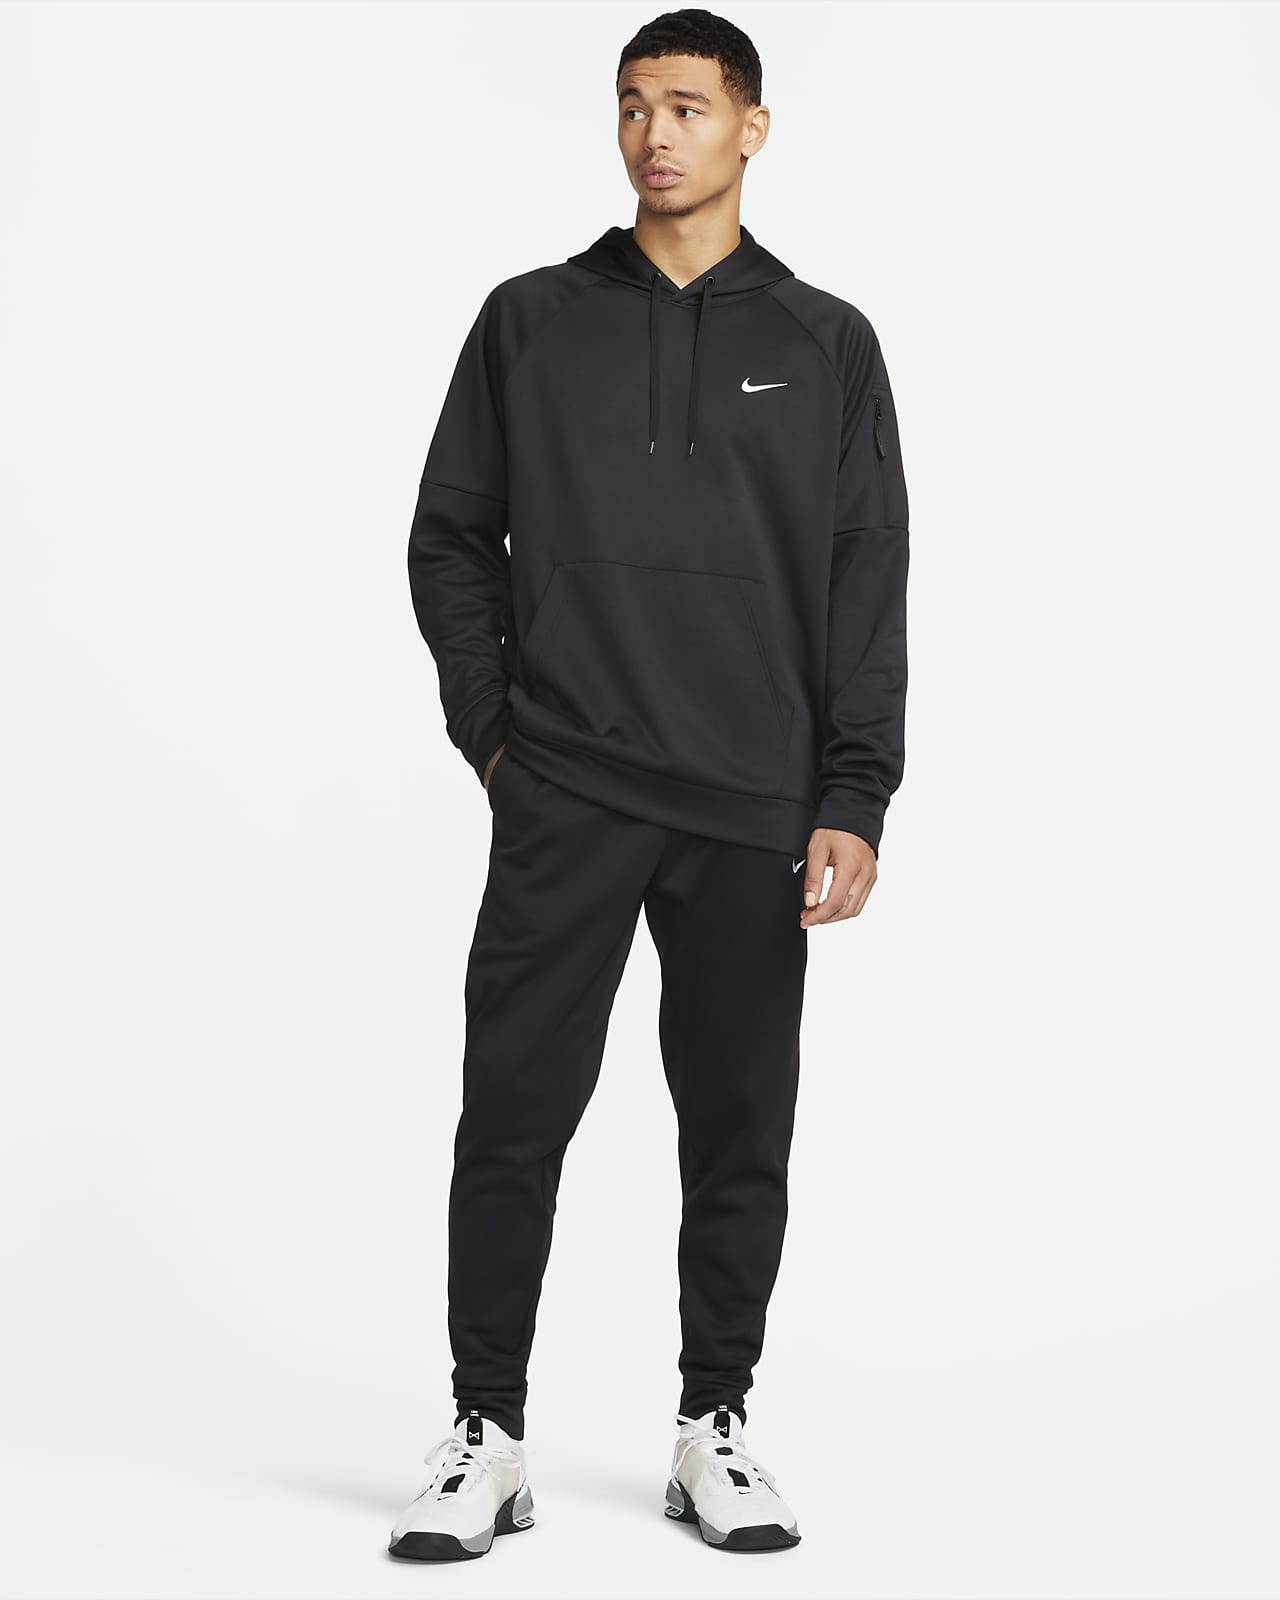 Nike Mens Track and Field Slim Fit Pants Black 